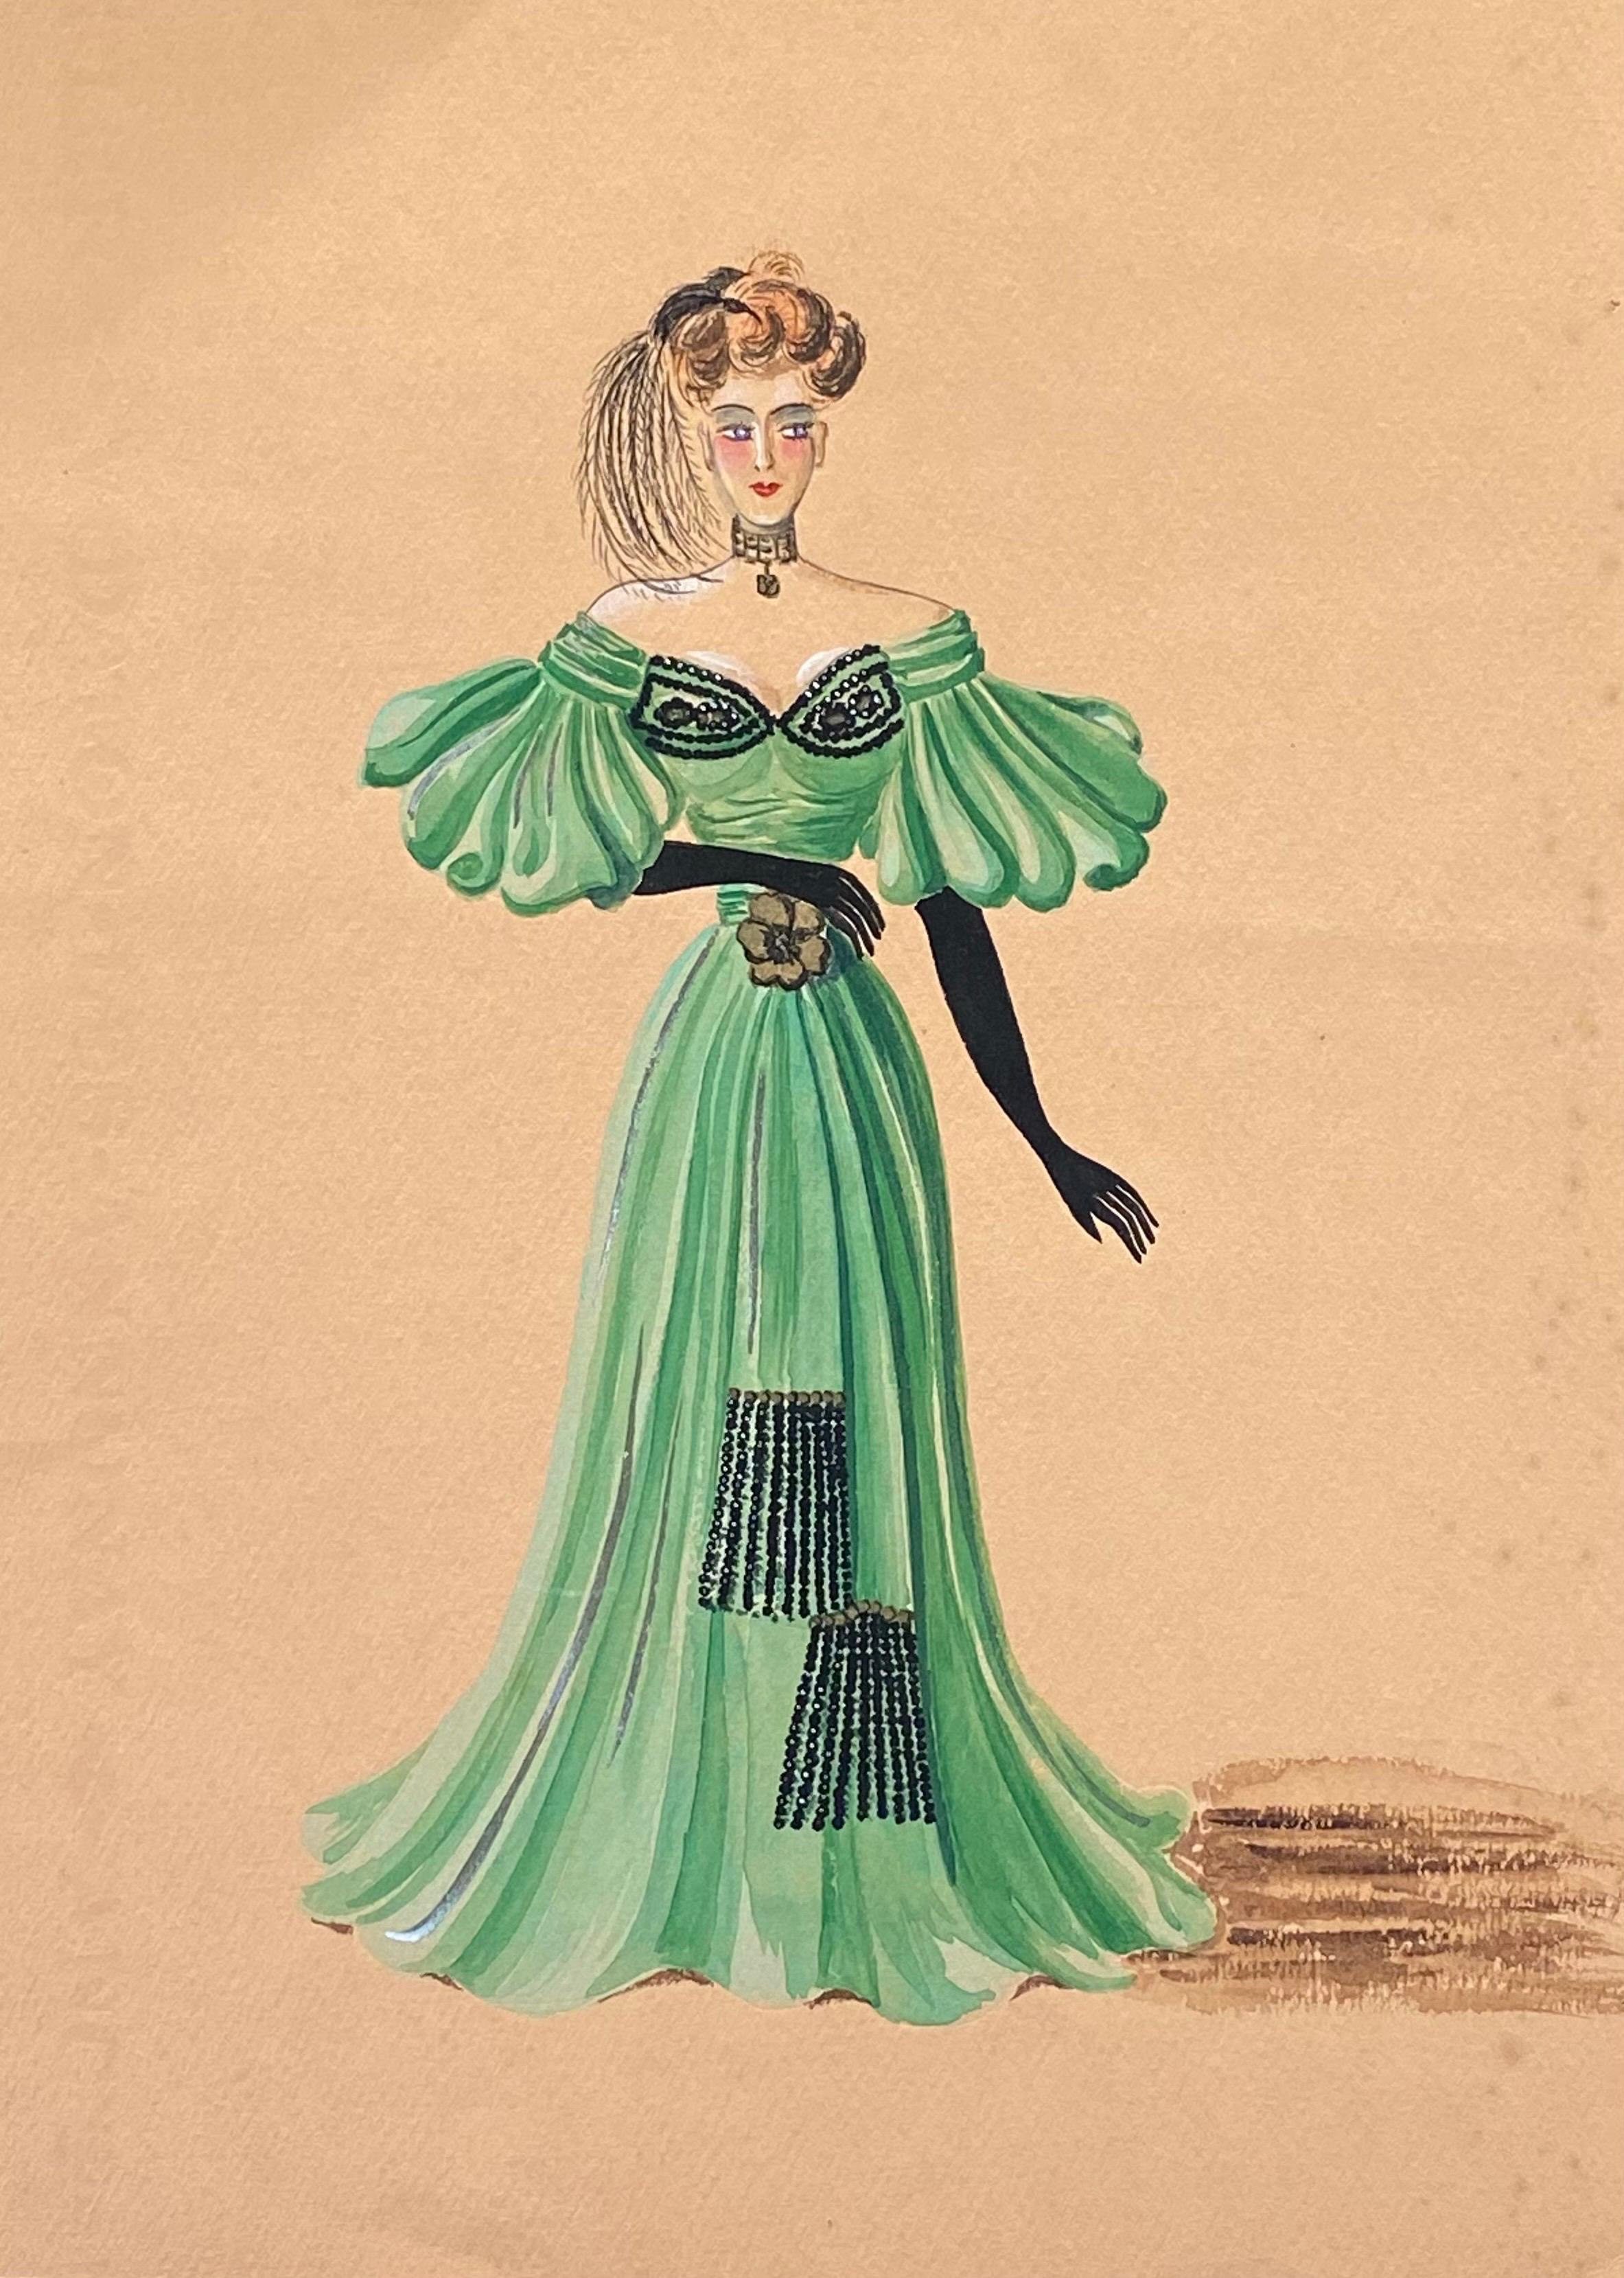 Geneviève Thomas Portrait Painting - 1940's Fashion Illustration - Lady In Dashing Green Ball Dress